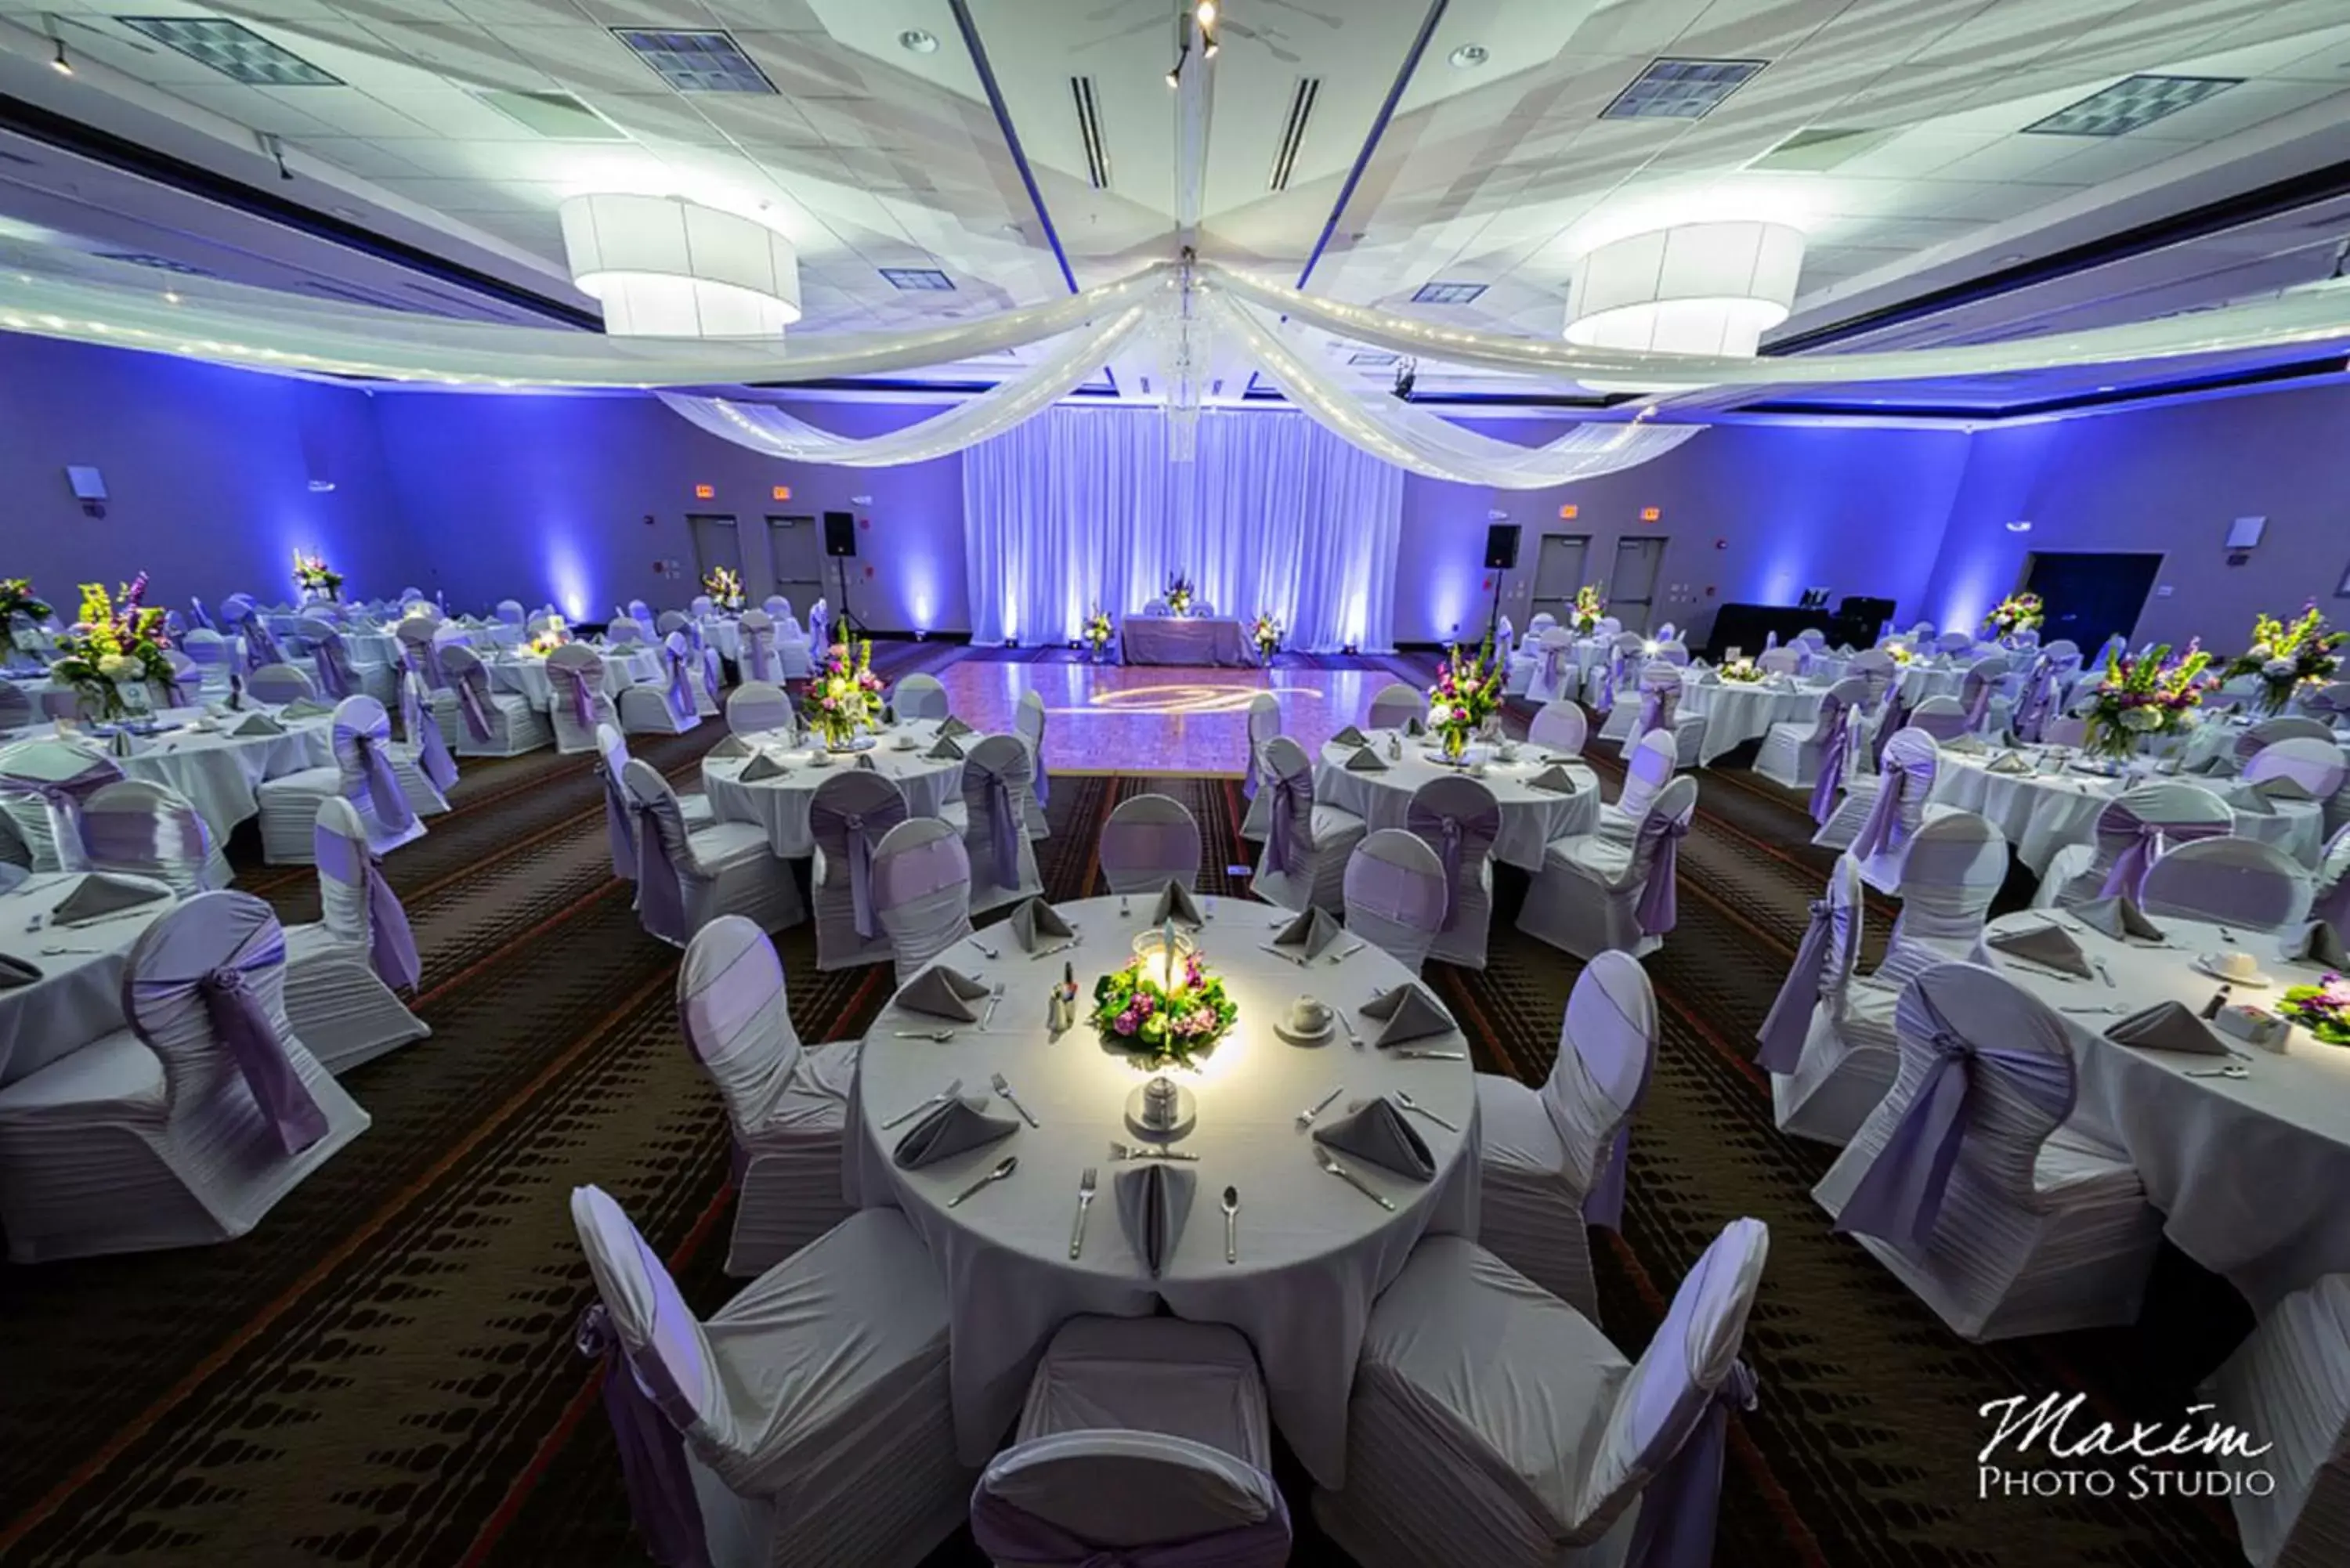 Meeting/conference room, Banquet Facilities in Hilton Garden Inn Dayton South - Austin Landing